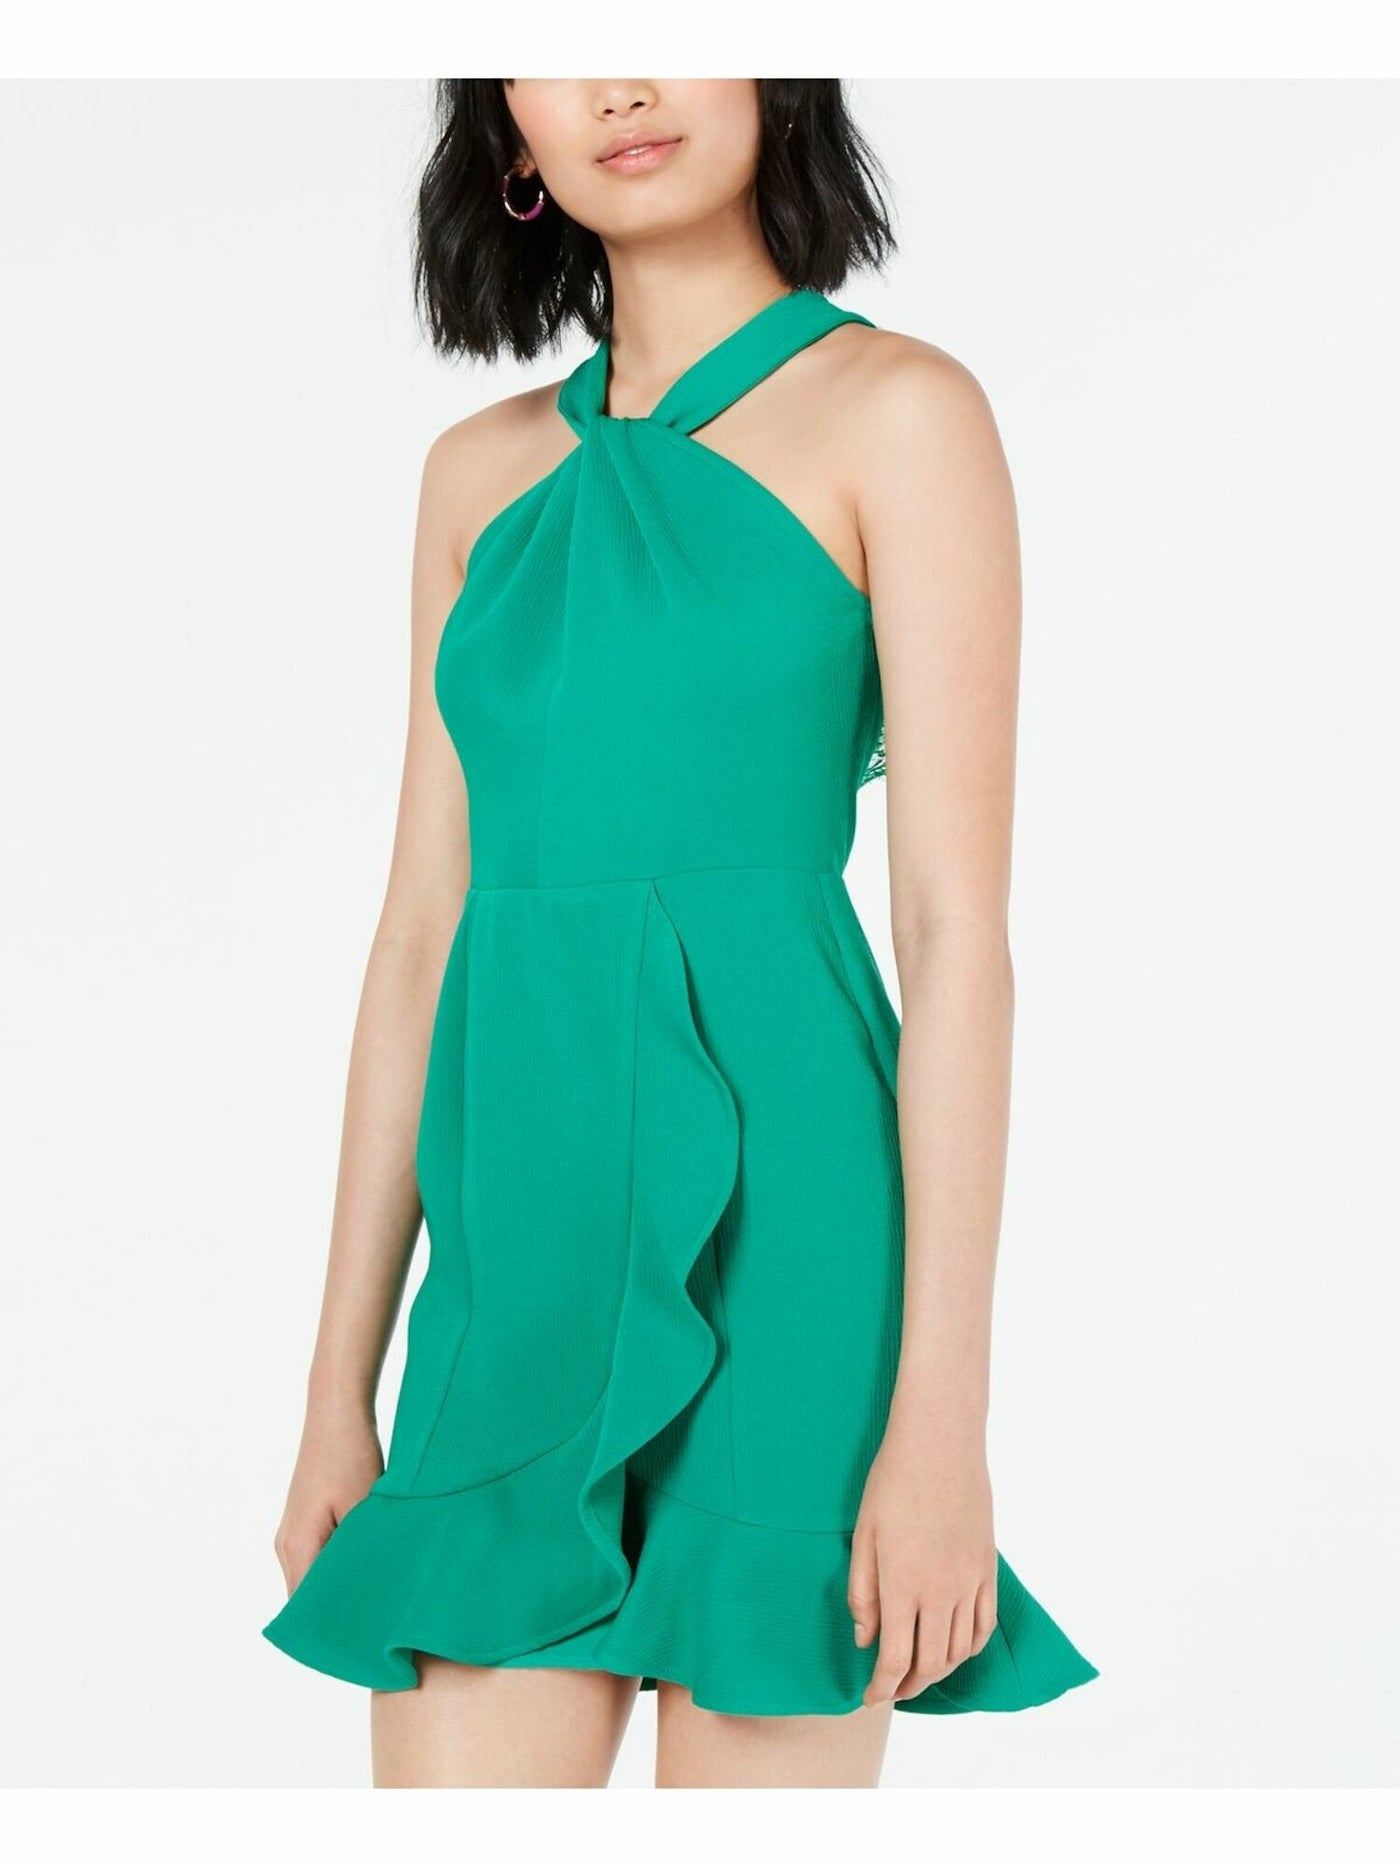 19 COOPER Womens Green Sleeveless Halter Mini Tulip Party Dress Juniors Size: S